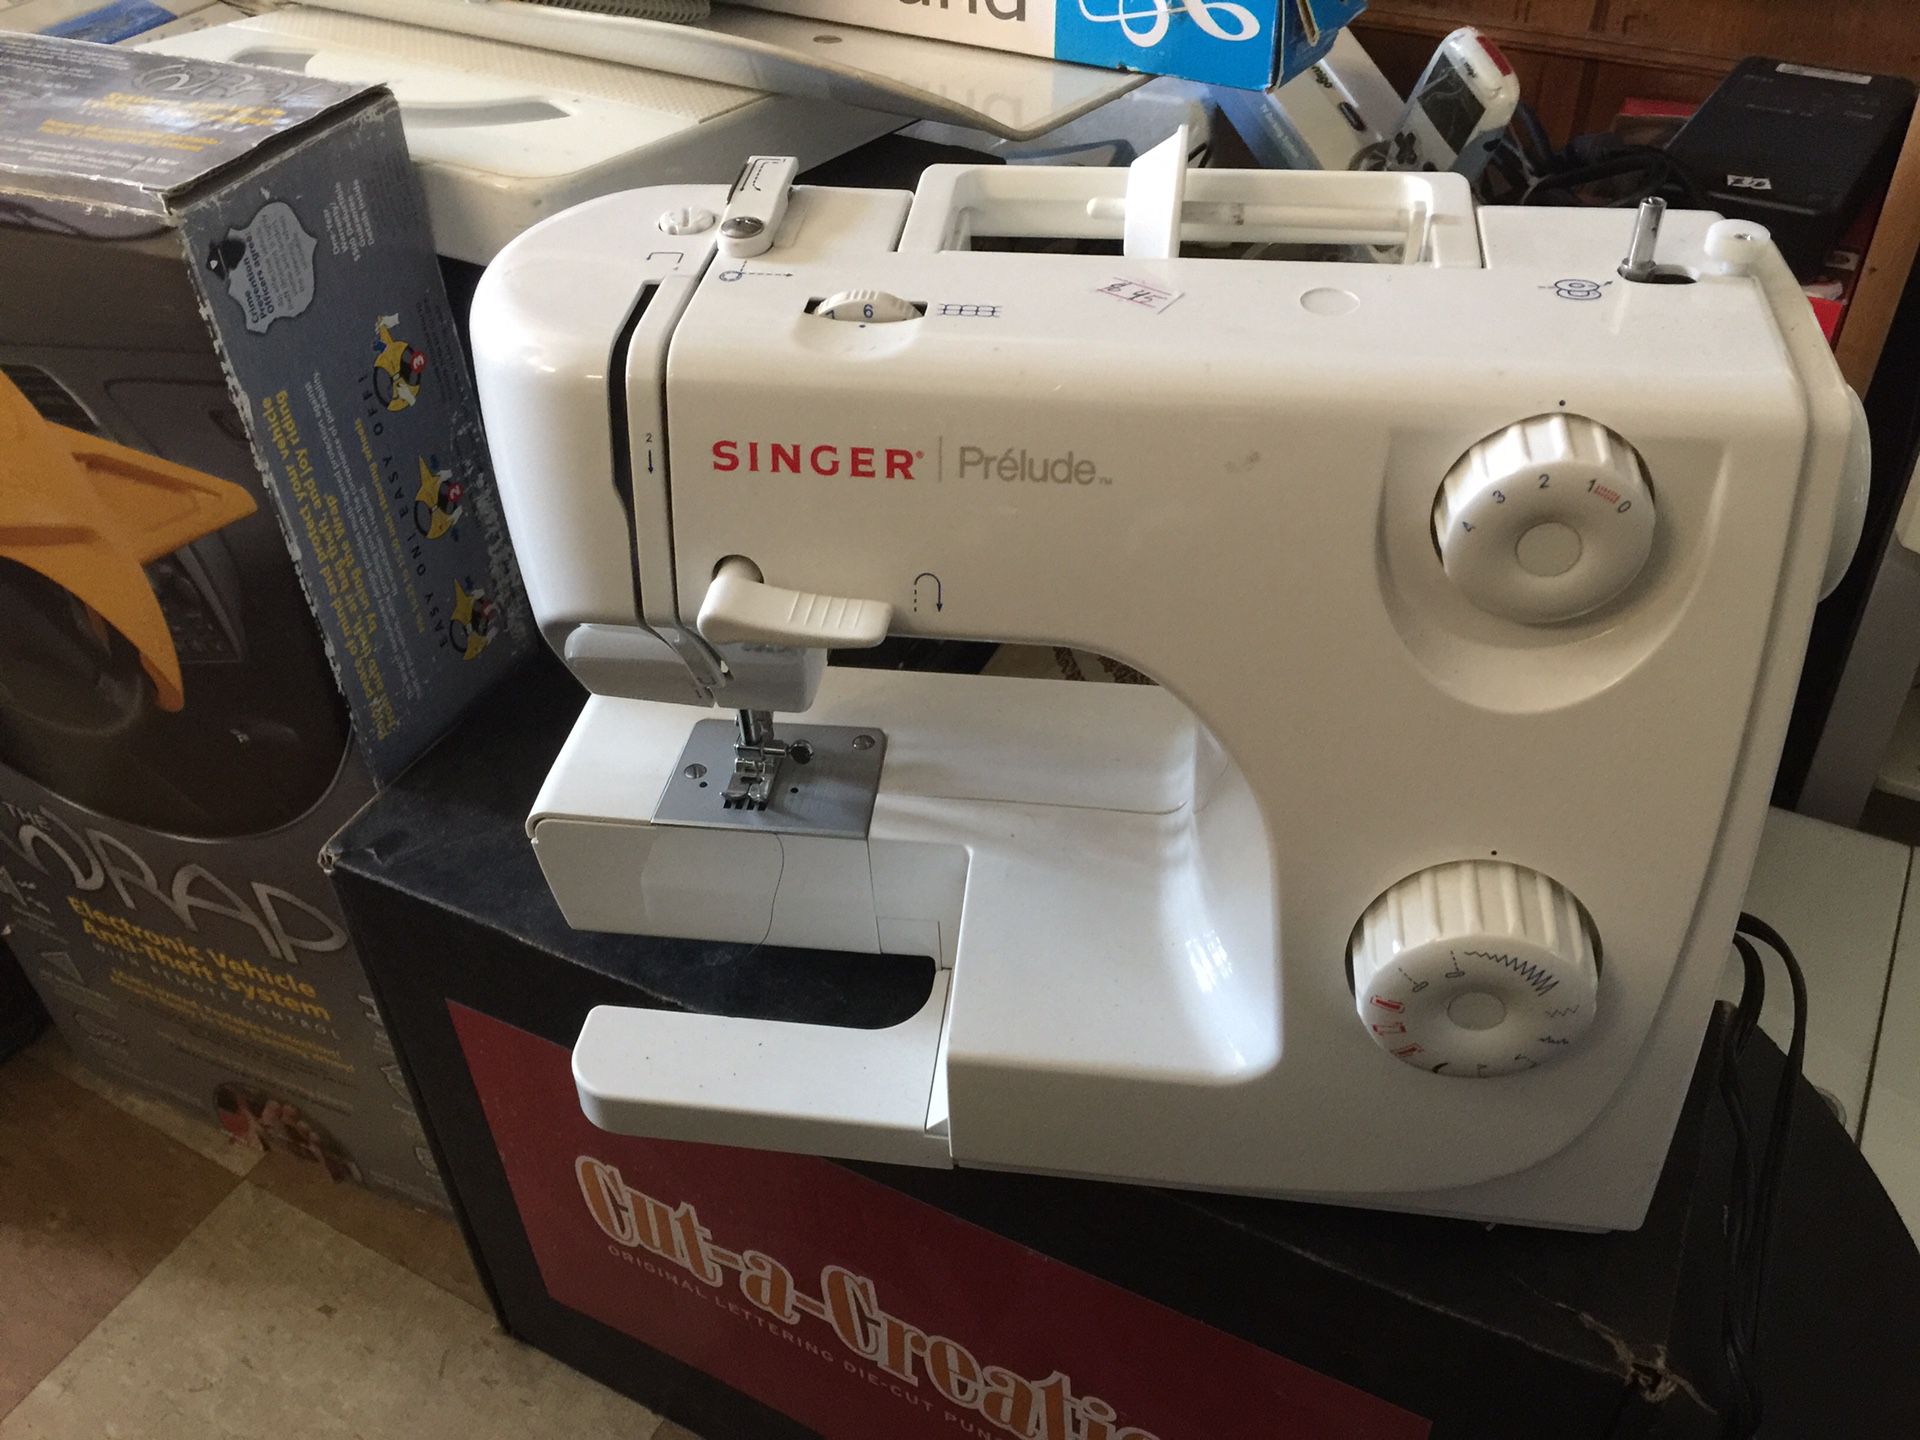 Singer prelude sewing machine